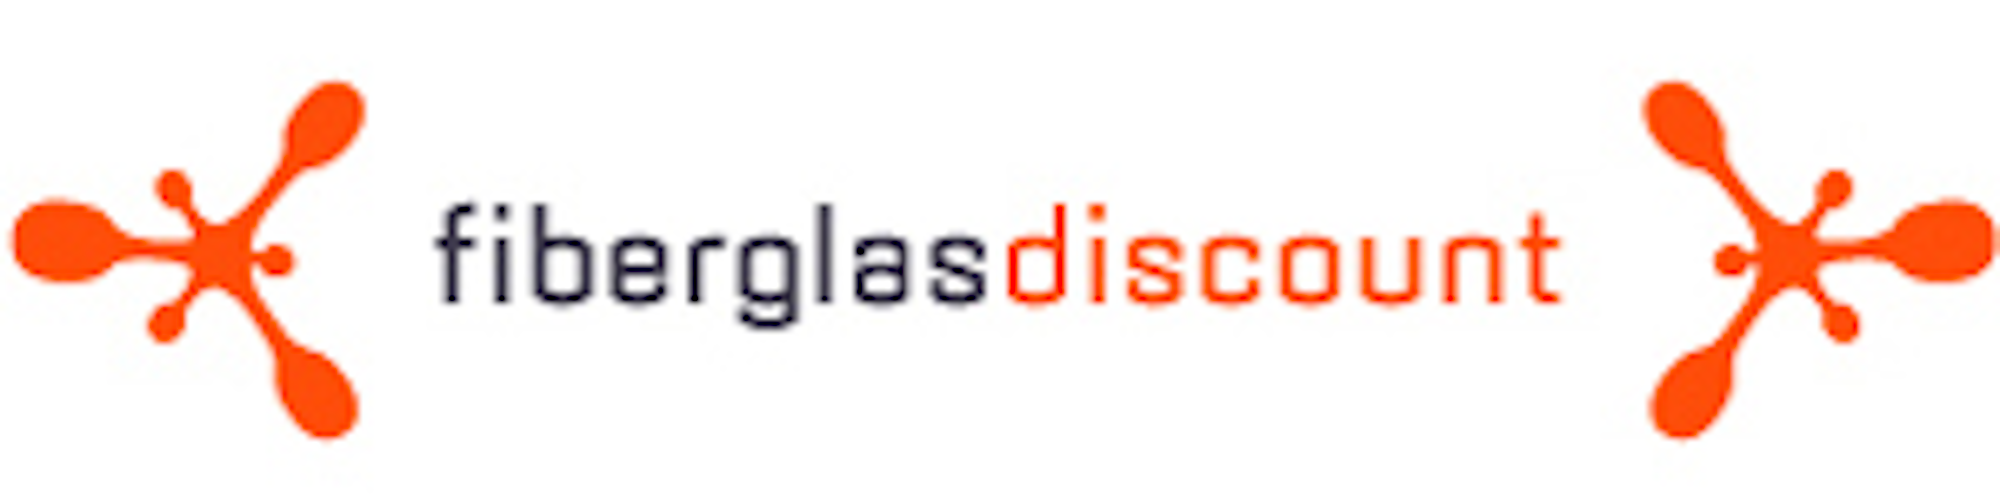 Fiberglas Discount GmbH